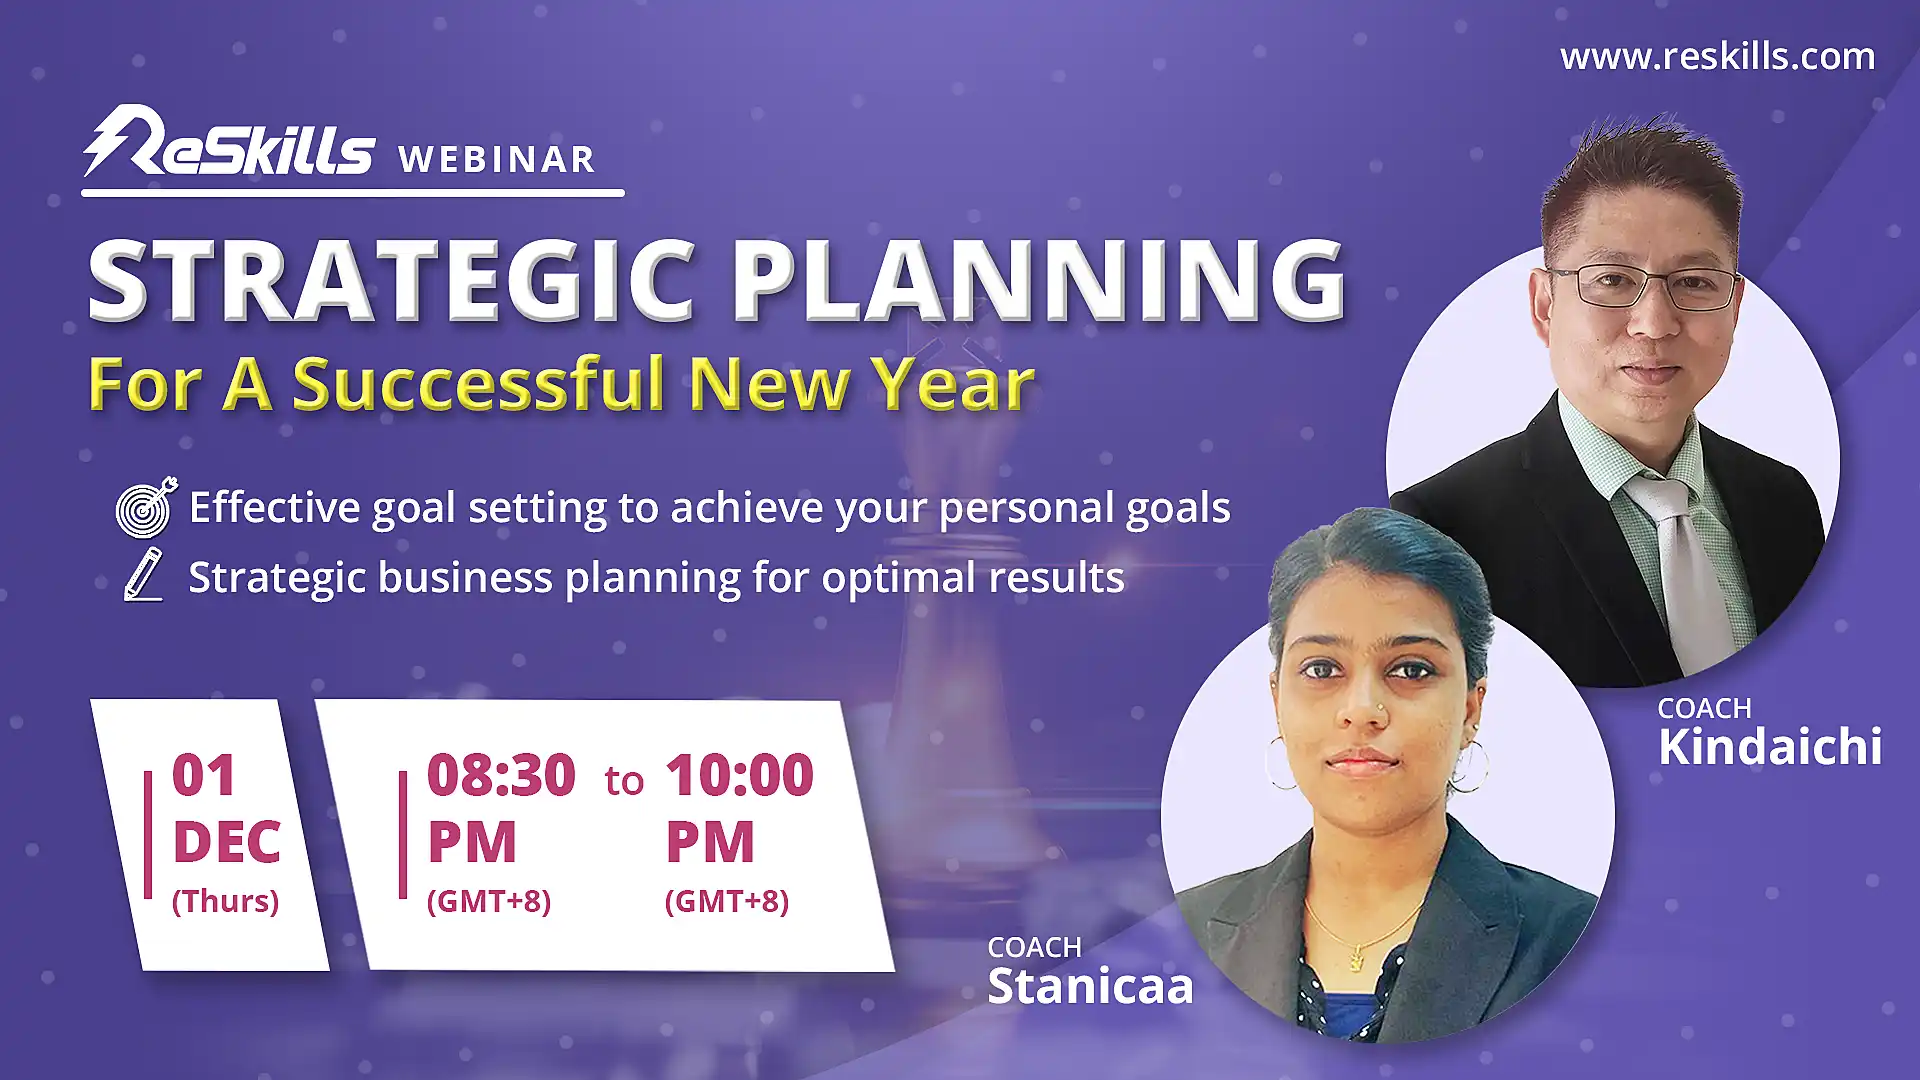 Strategic Planning For A Successful New Year - ReSkills